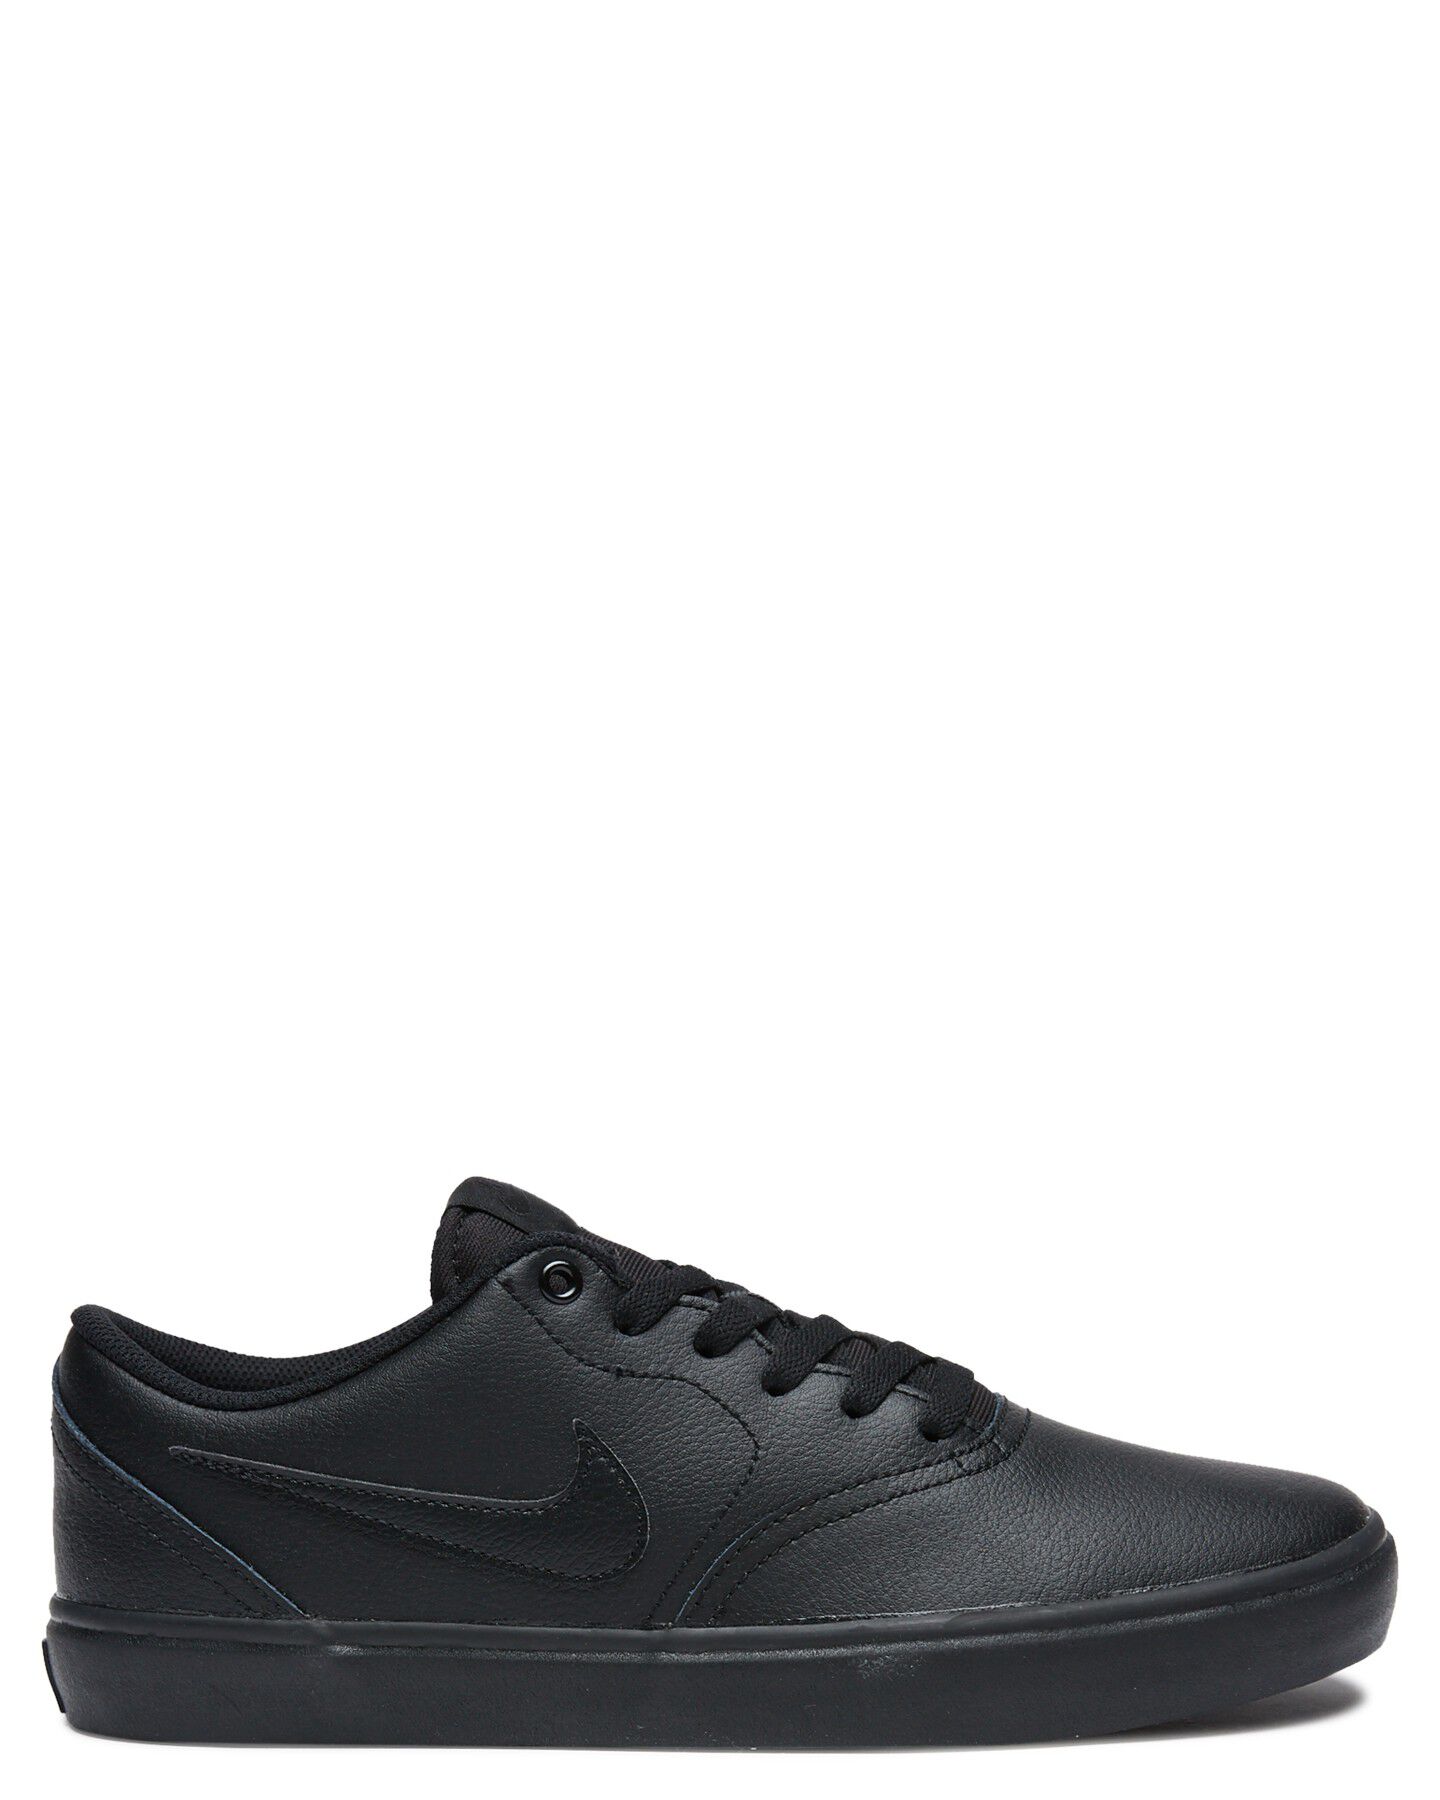 nike shoes black leather